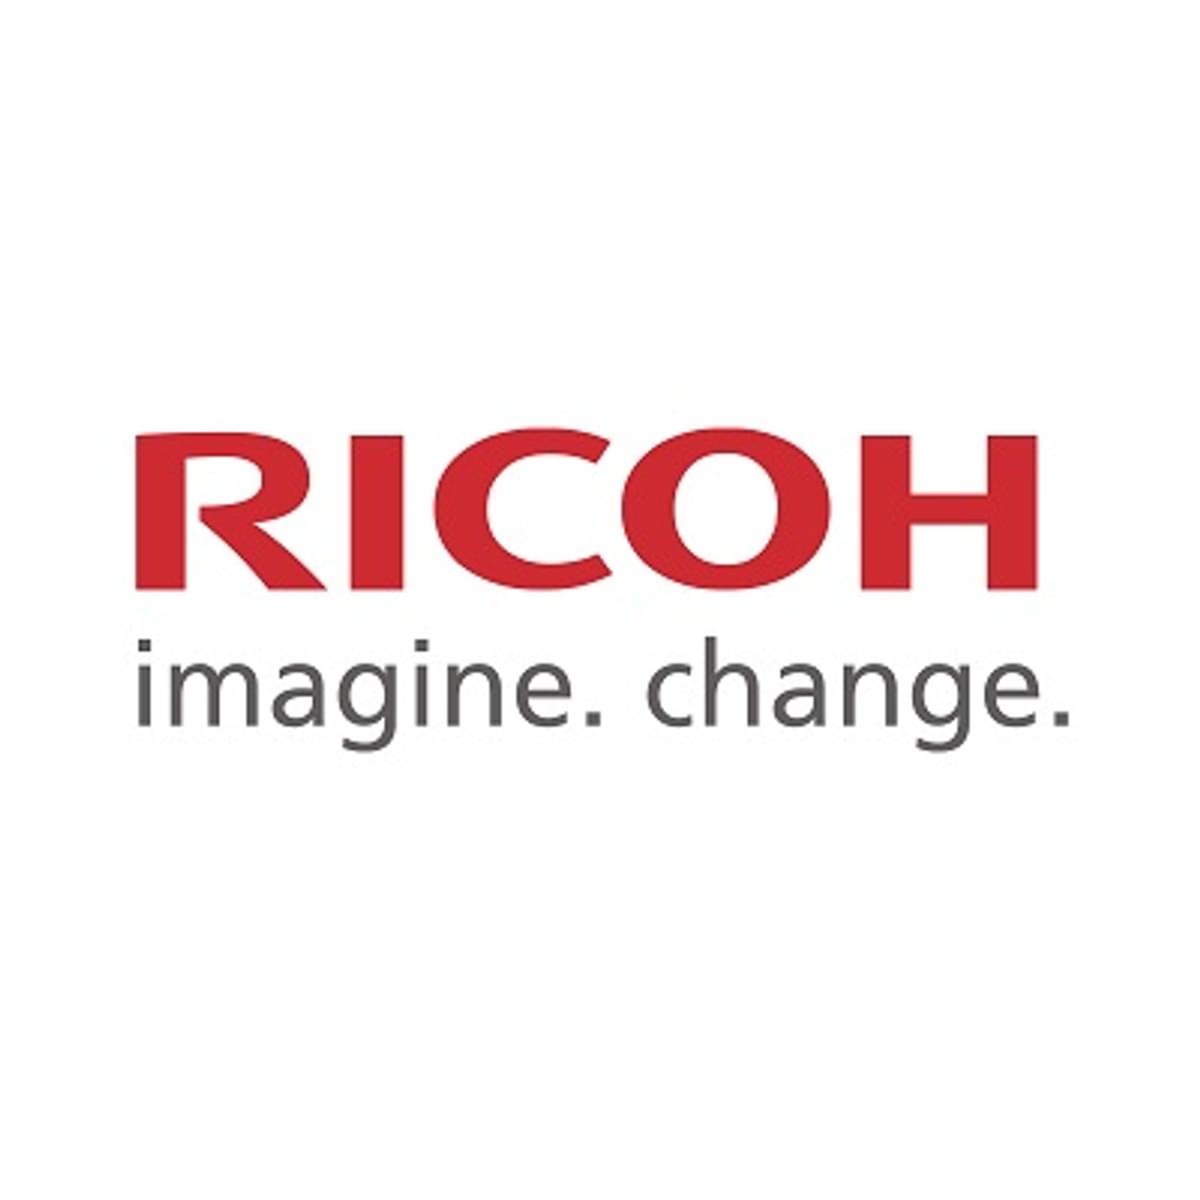 Ricoh Europe koopt DataVision en SimplicITy image